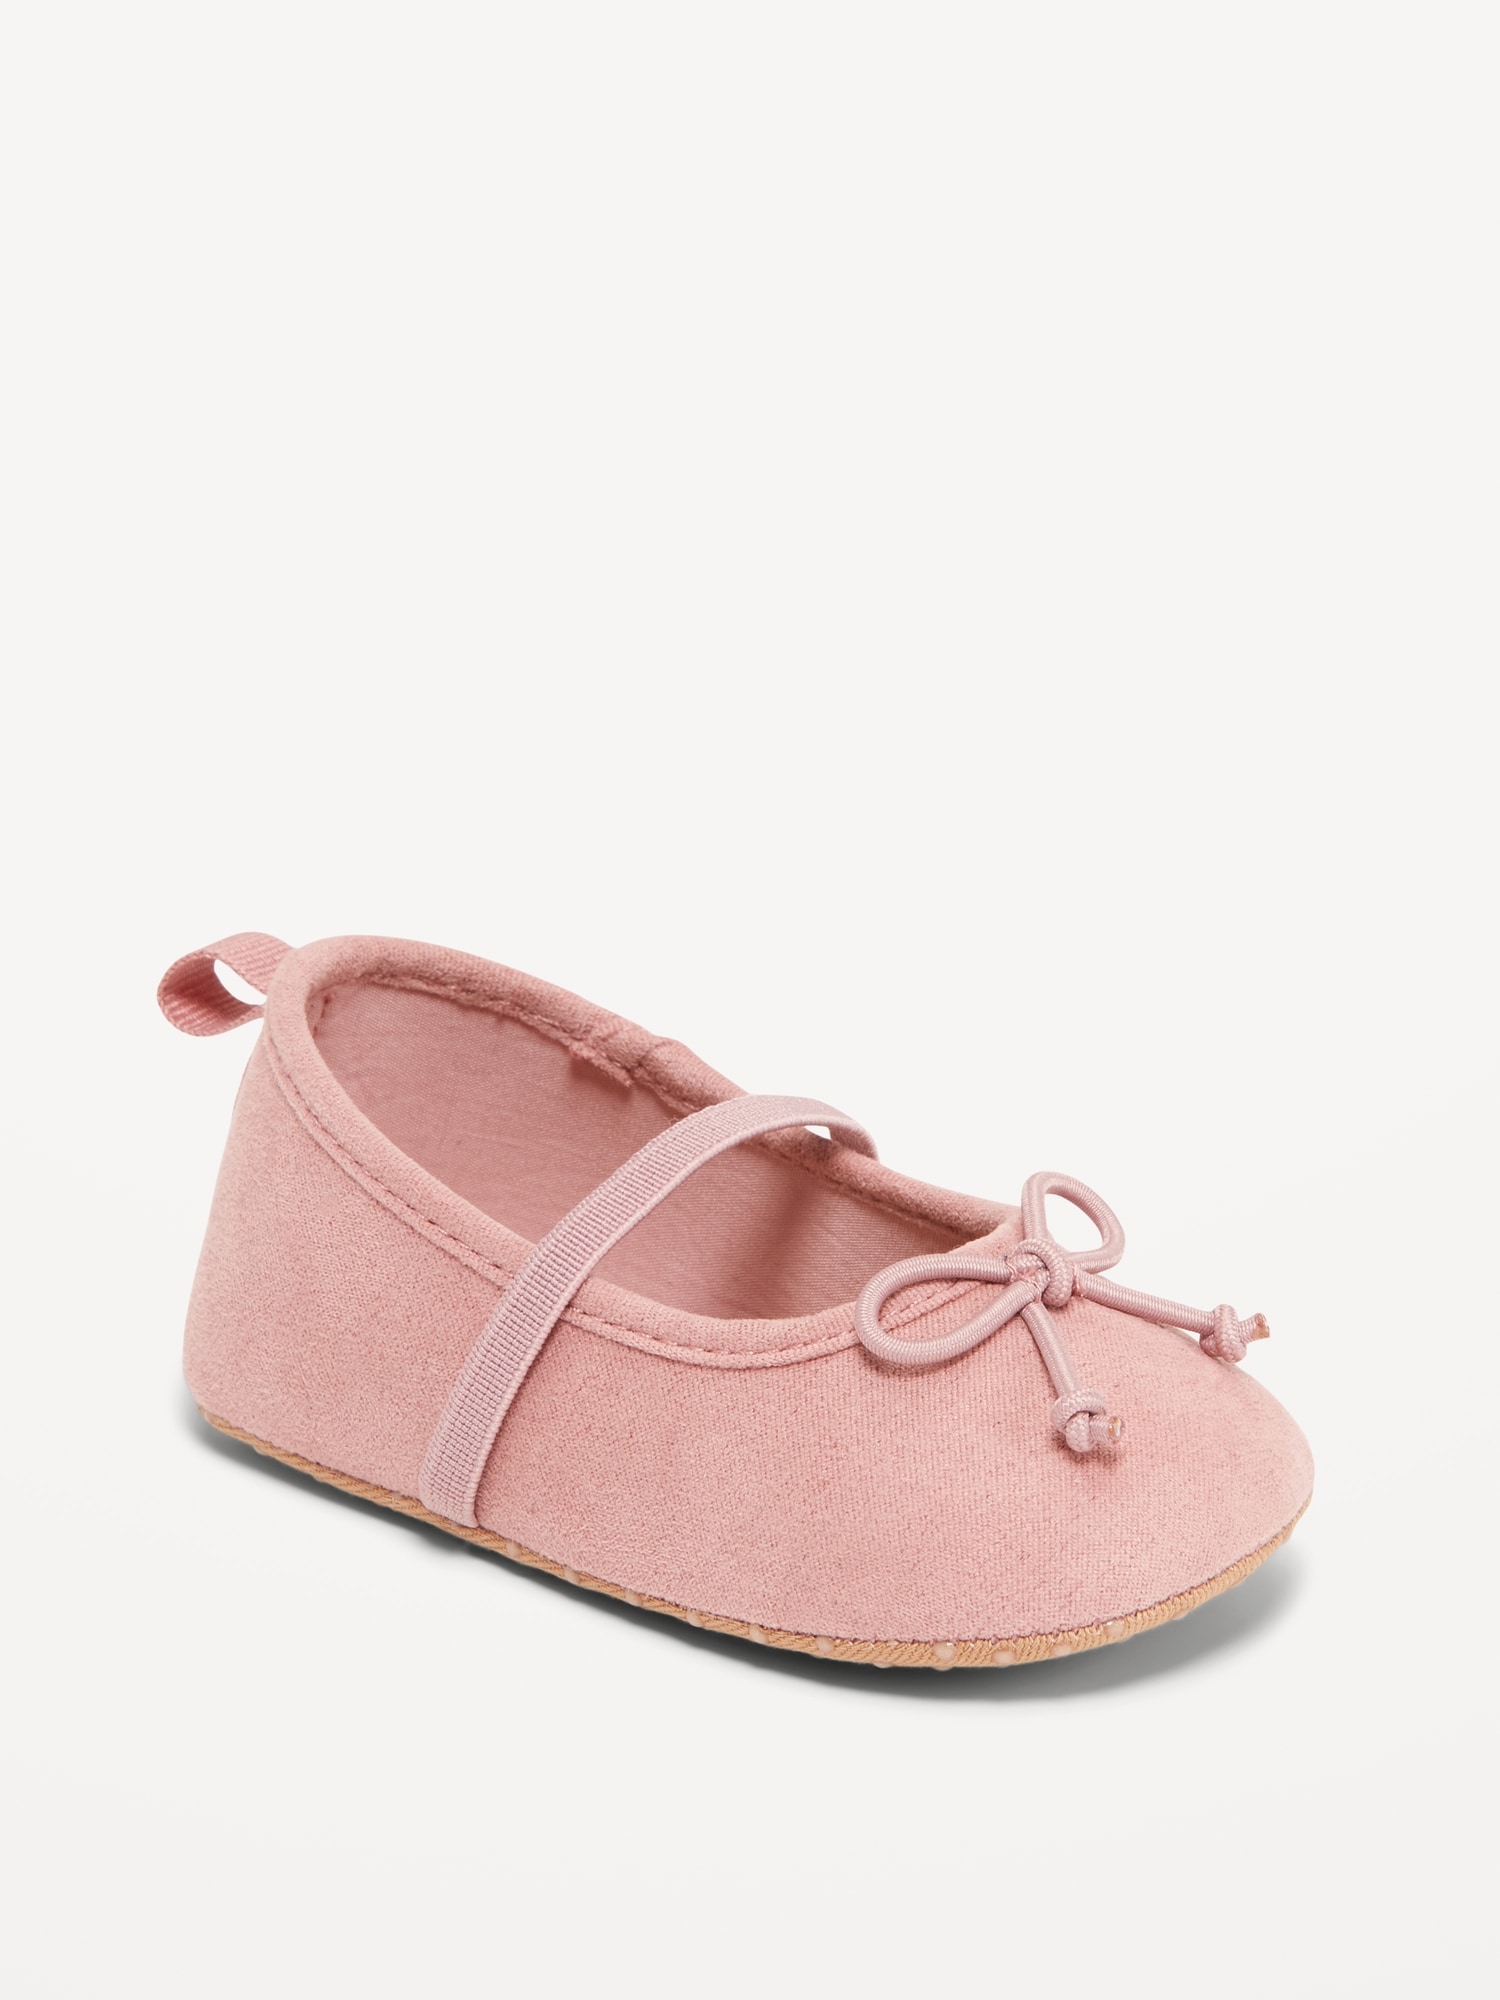 Oldnavy Ballet Flat Shoes for Baby